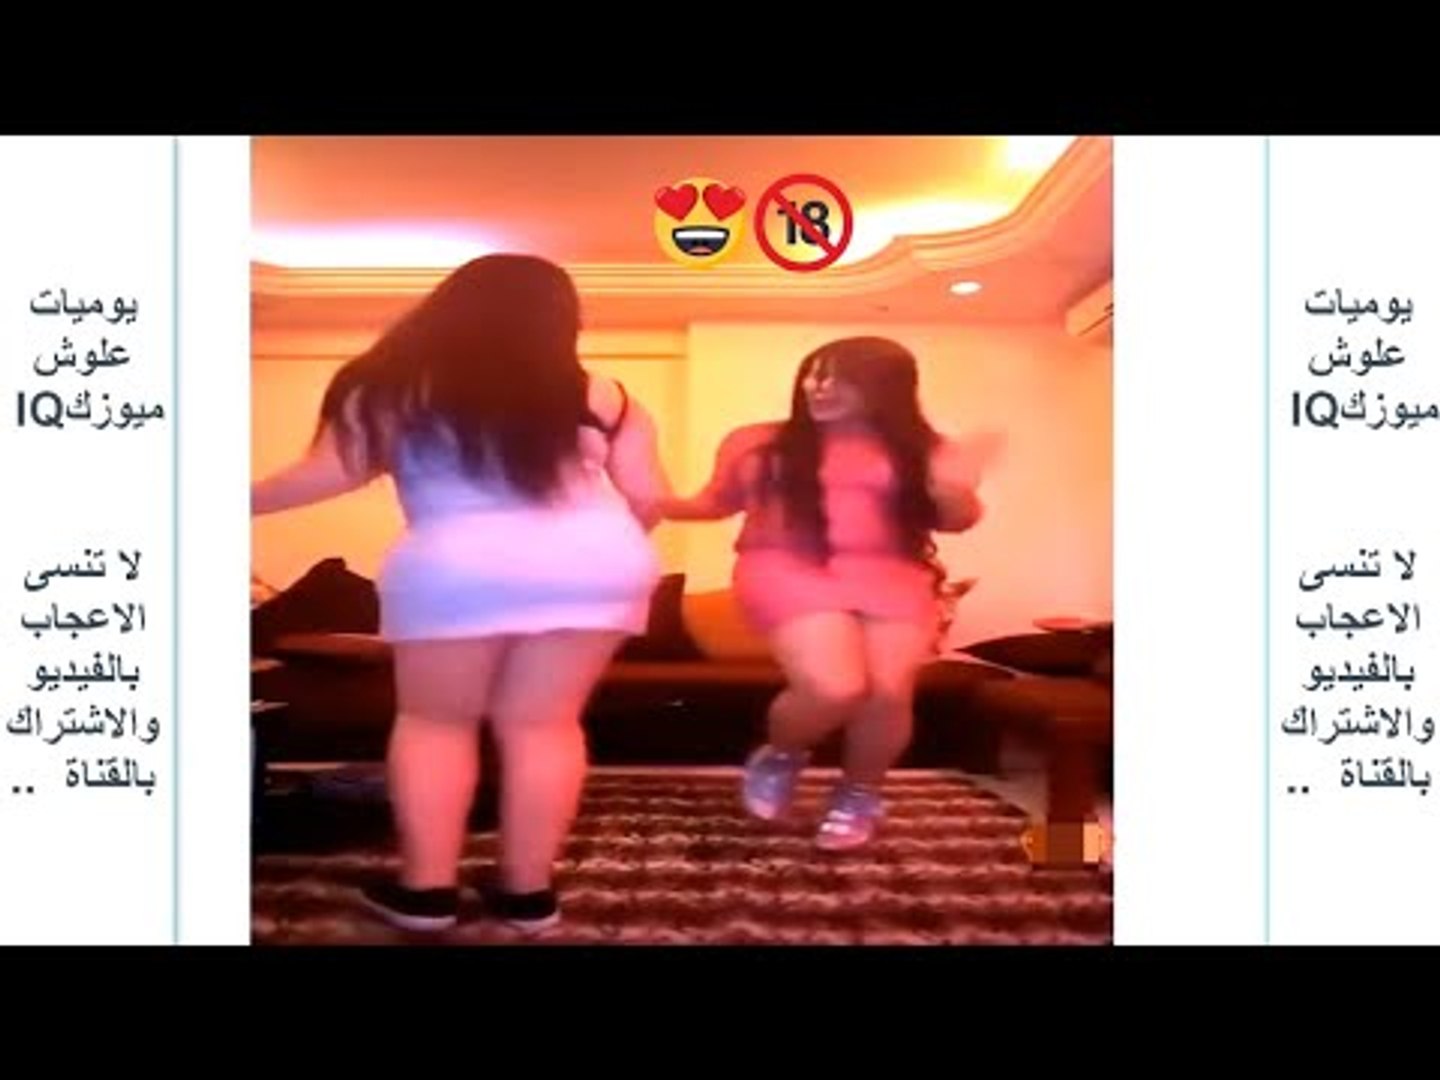 اجمل رقص بنات لبنانيات في الملاهي رقص شرقي ساخن جدا - video Dailymotion